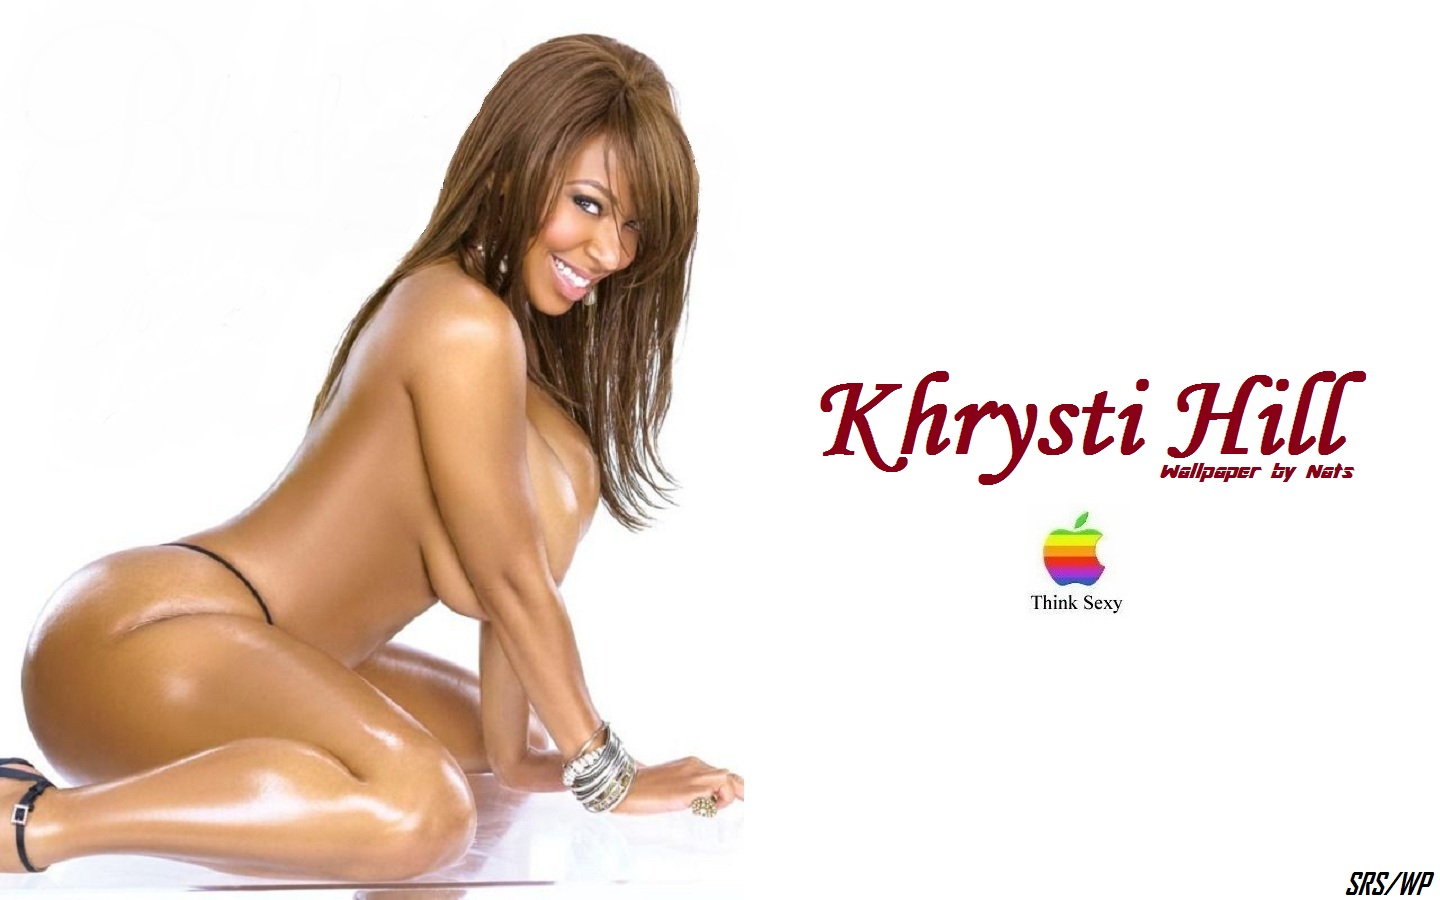 Download High quality Khrysti Hill wallpaper / Celebrities Female / 1440x900